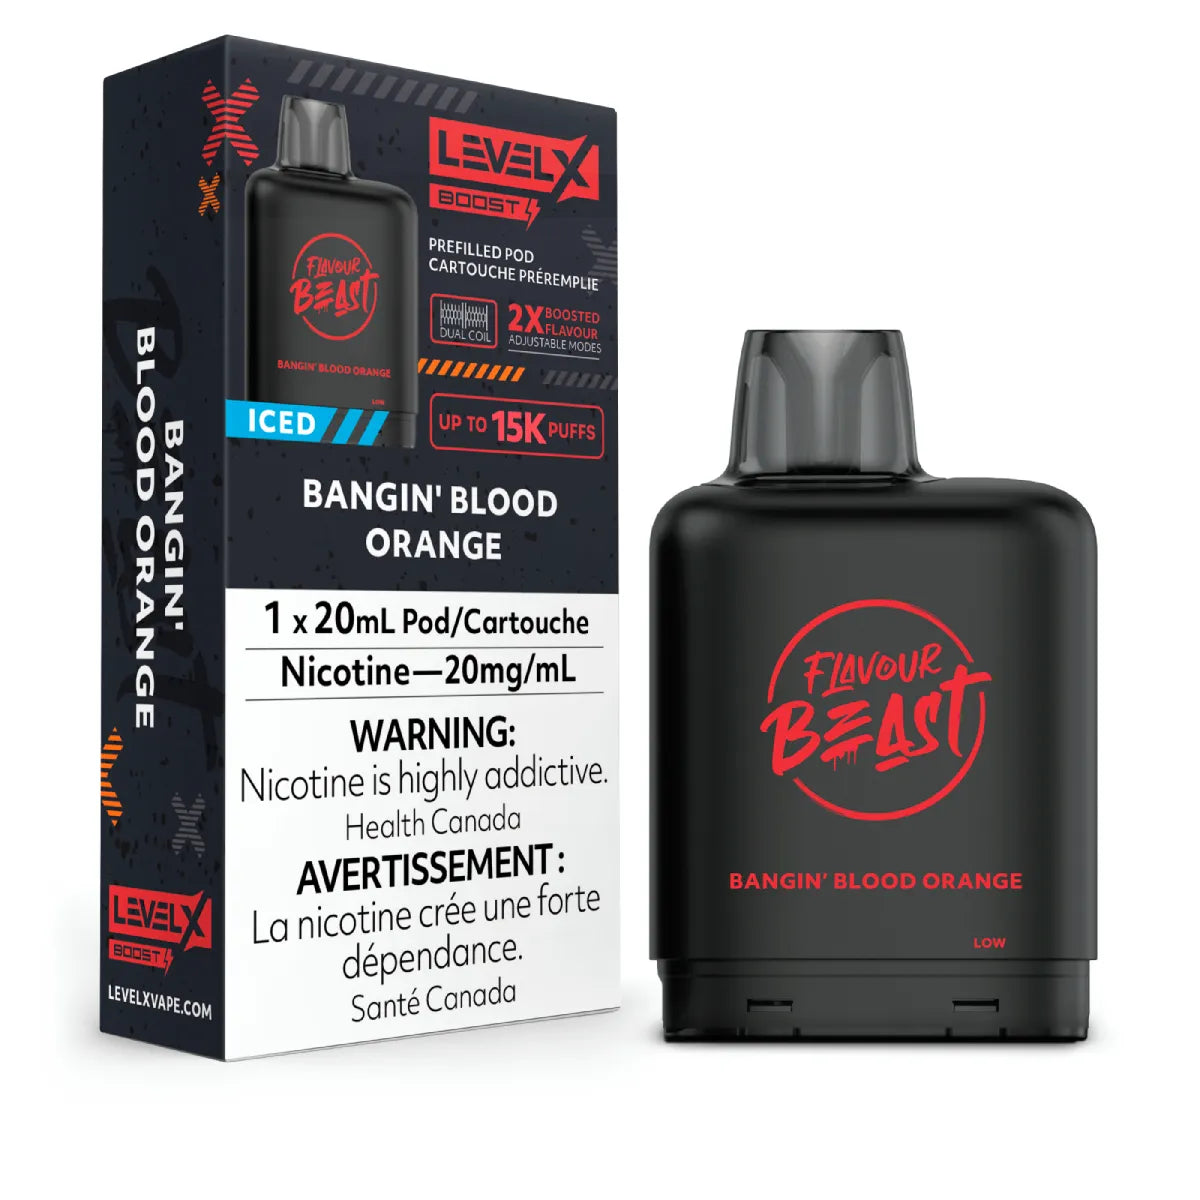 Bangin' Blood Orange Iced - Level X Flavour Beast Boost Pod 20mL - 6pc/Carton